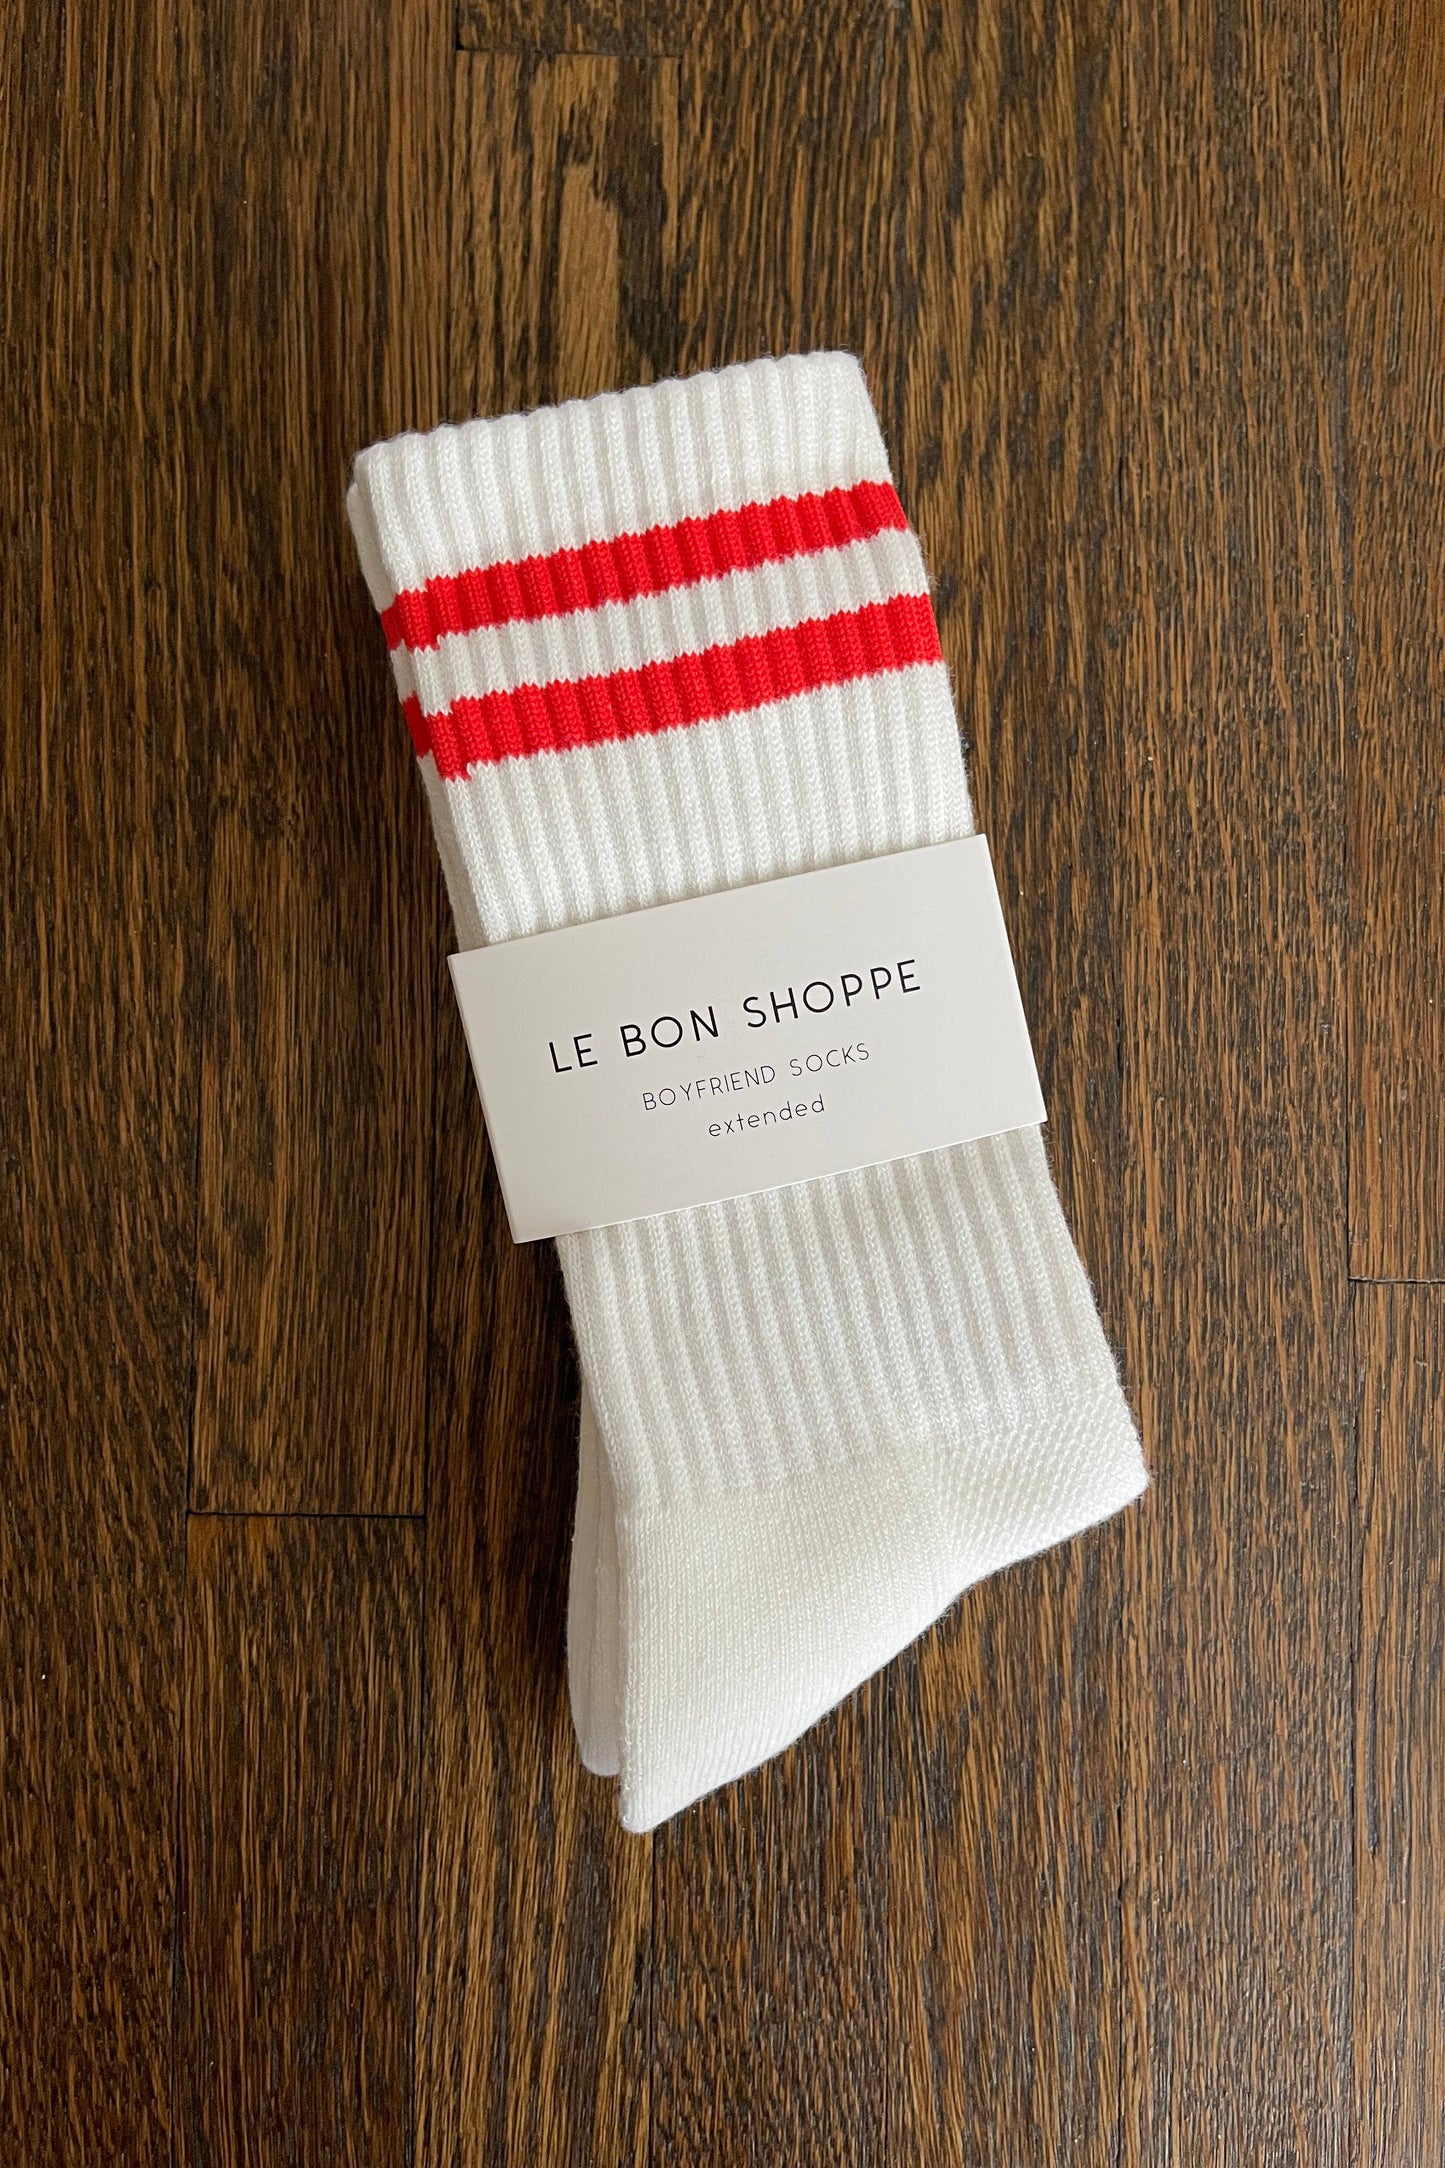 Le Bon Shoppe - Extended Boyfriend Socks: Milk